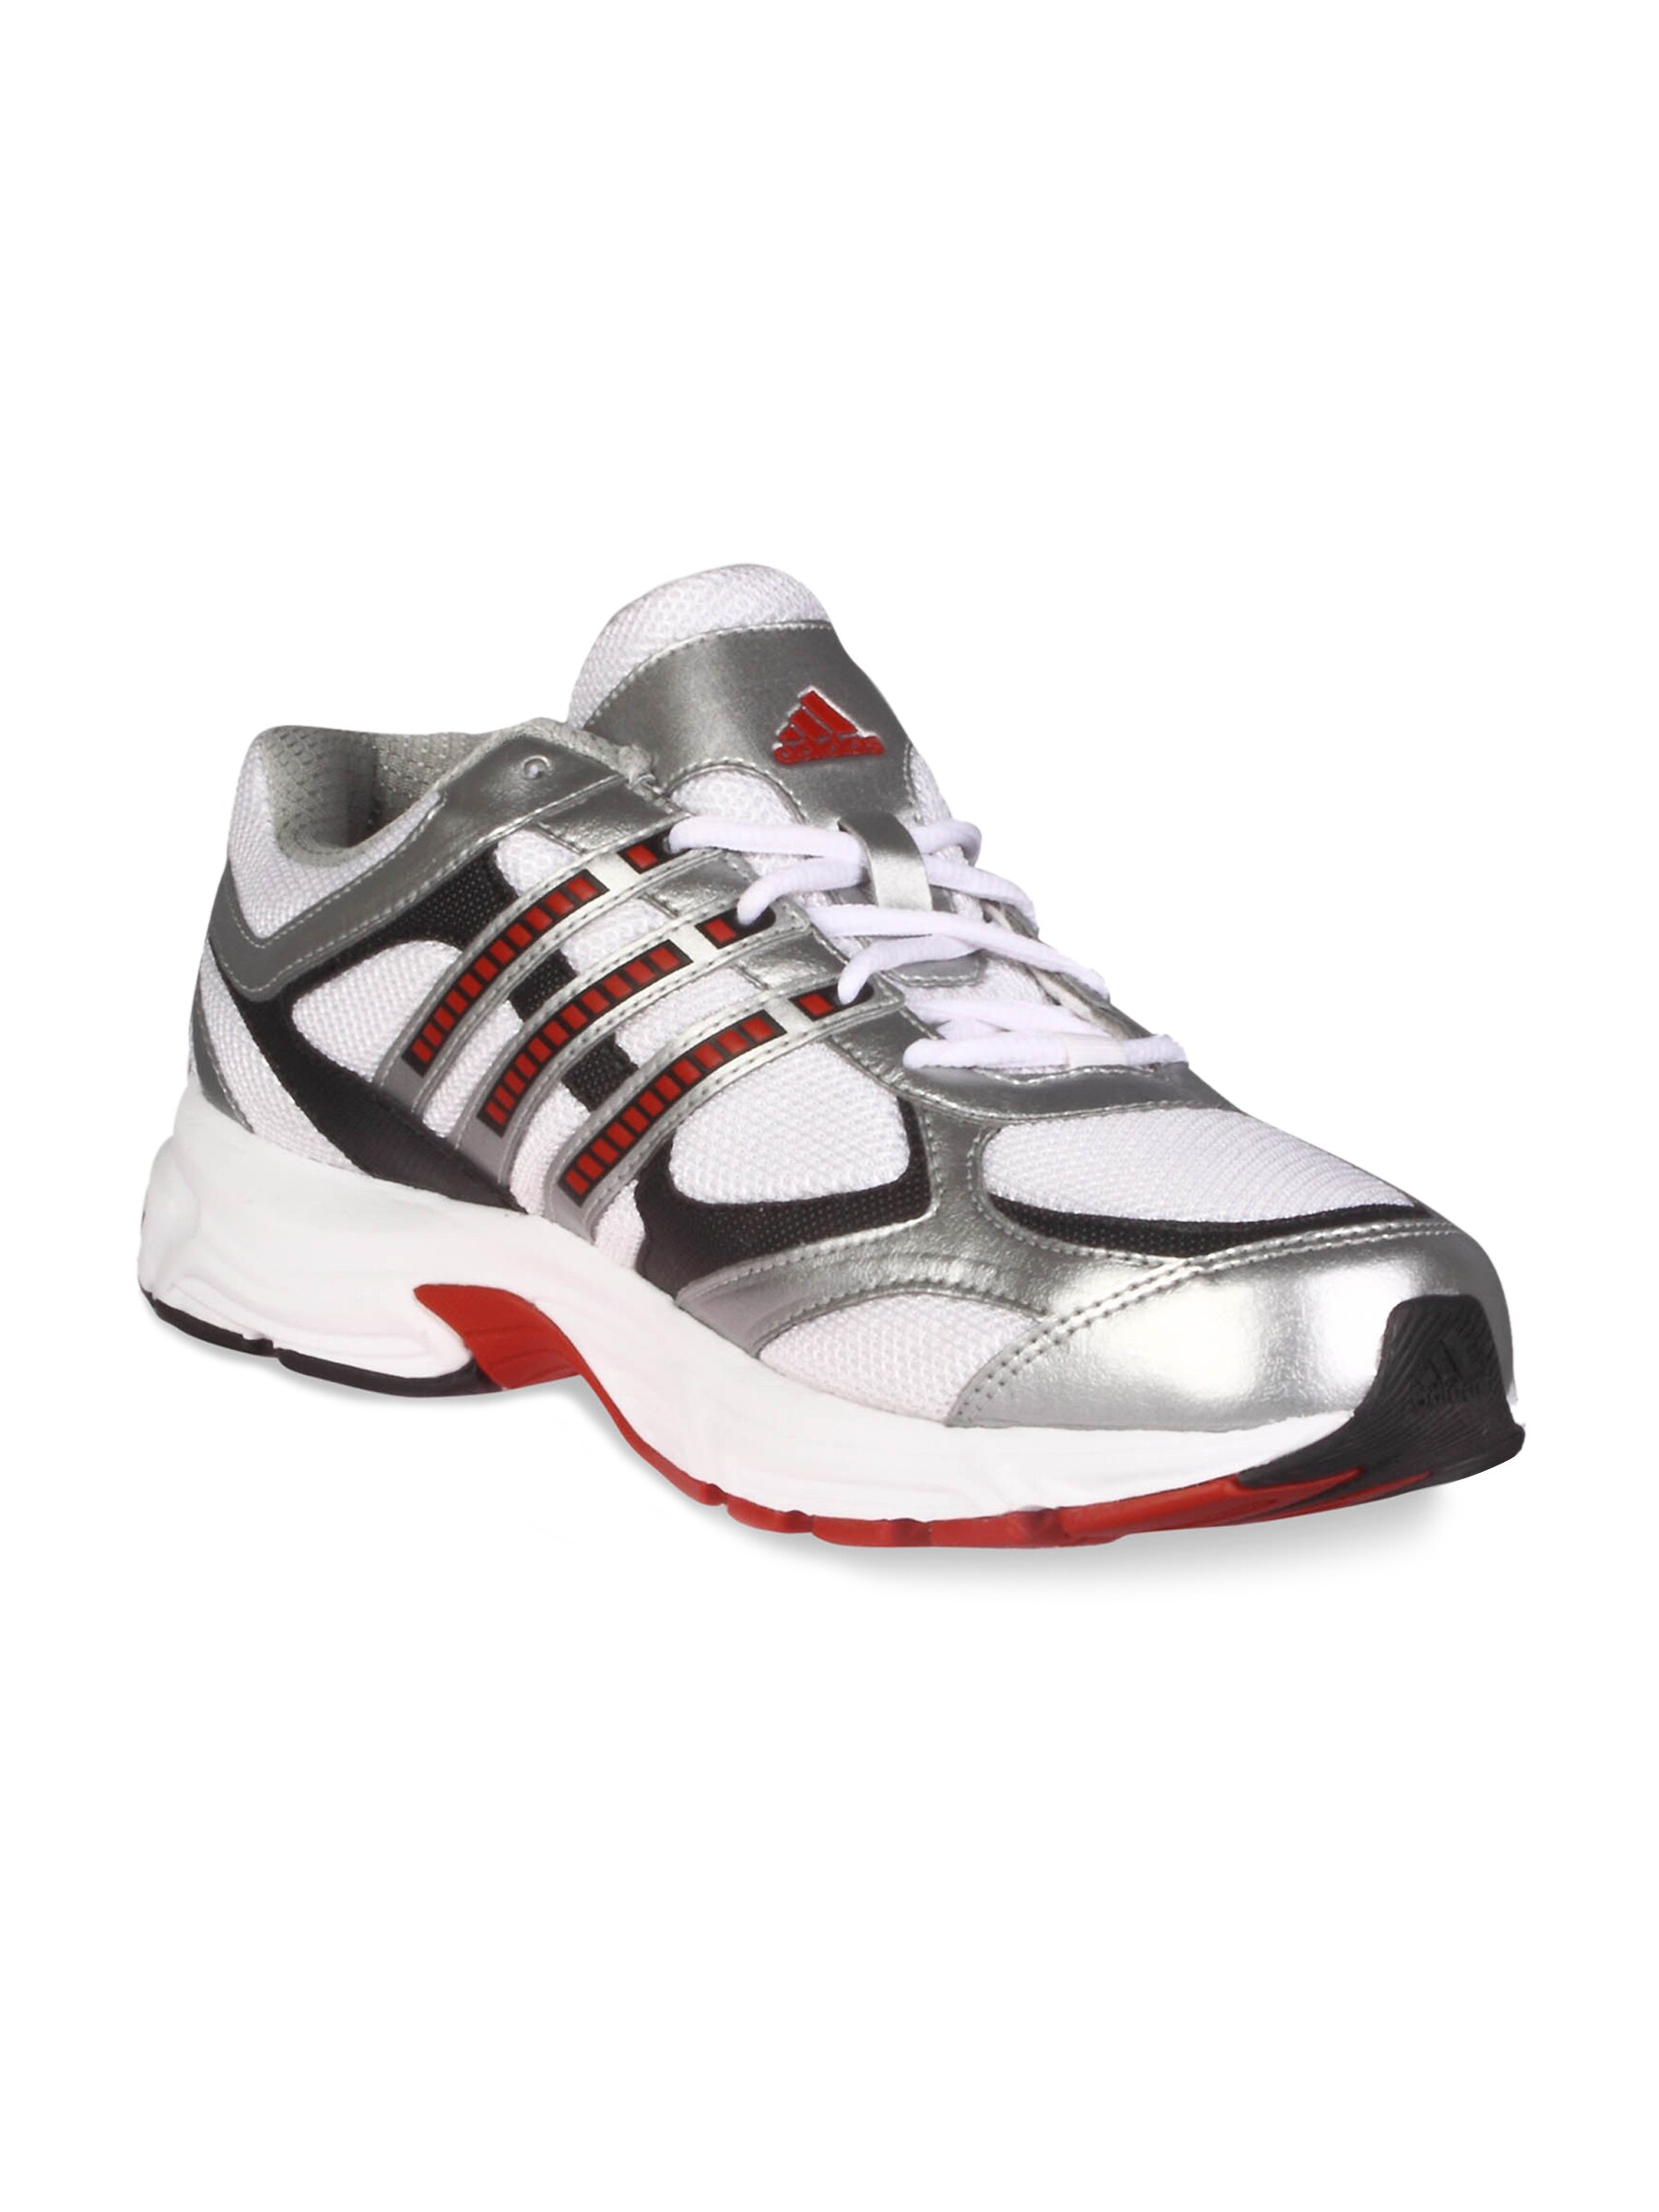 ADIDAS Men's Sprint Speed White Universal Red Shoe